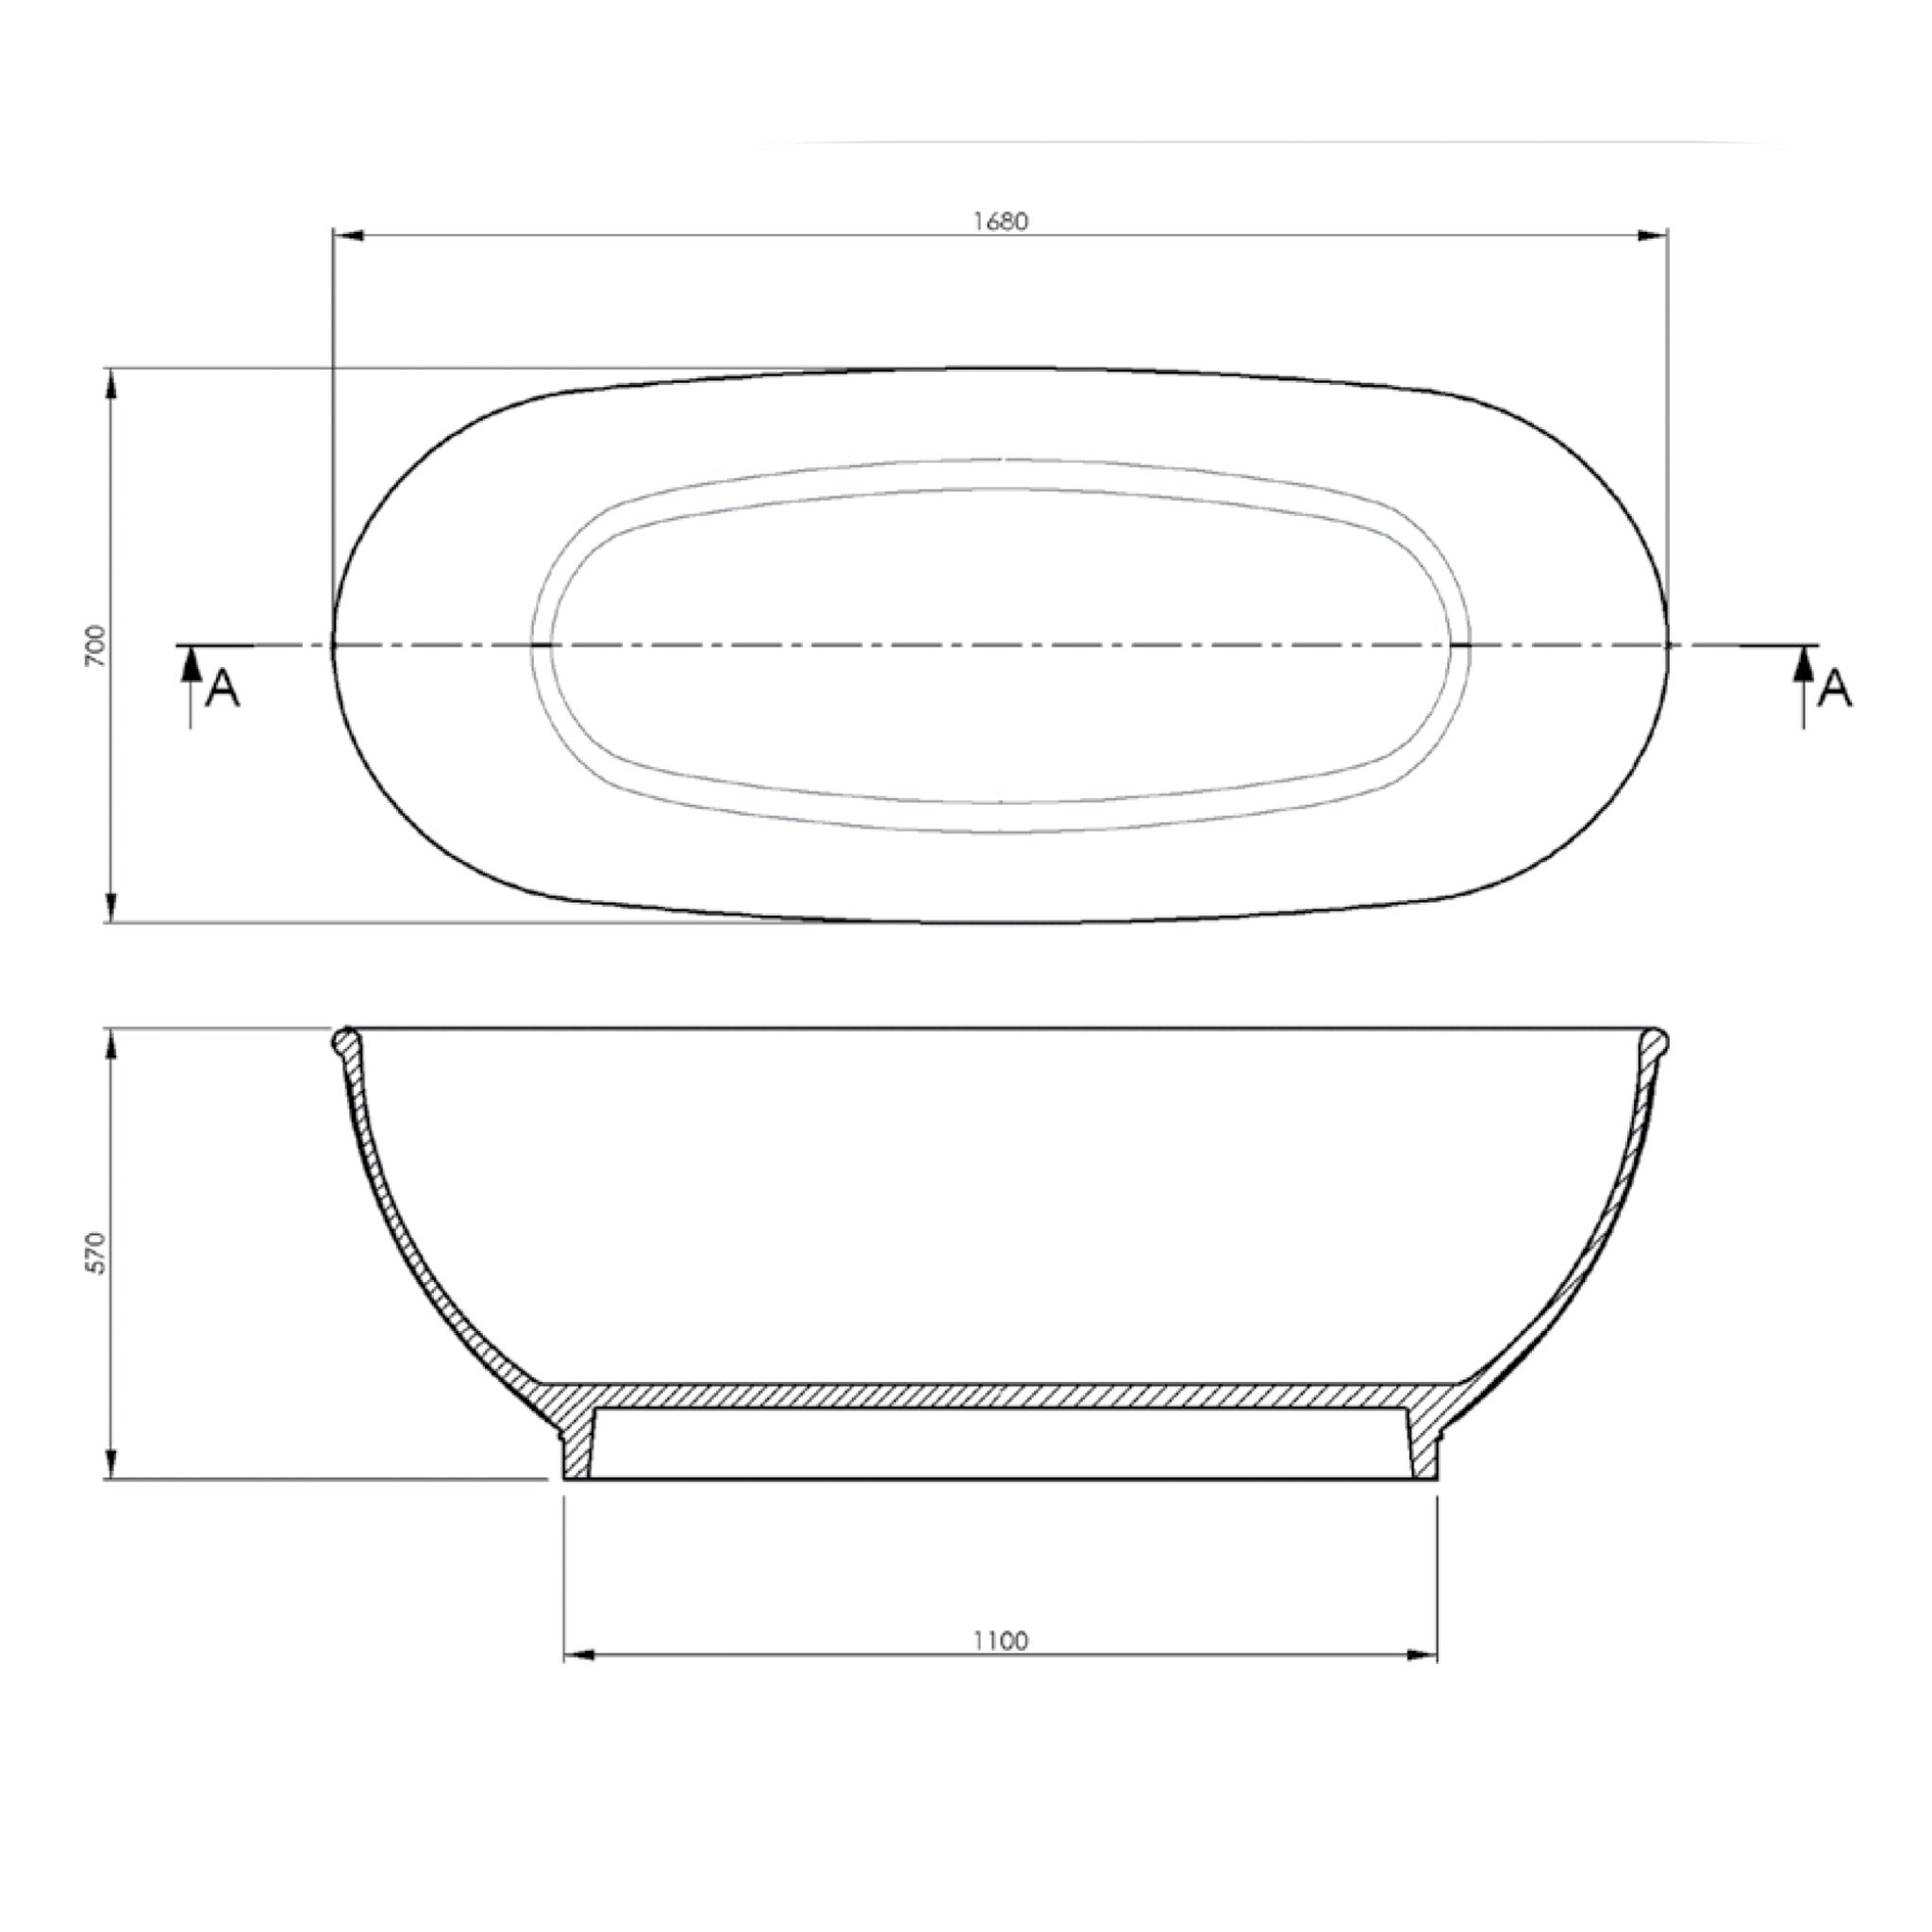 BC Designs Casini Double Ended Cian Bath 1680 x 750mm